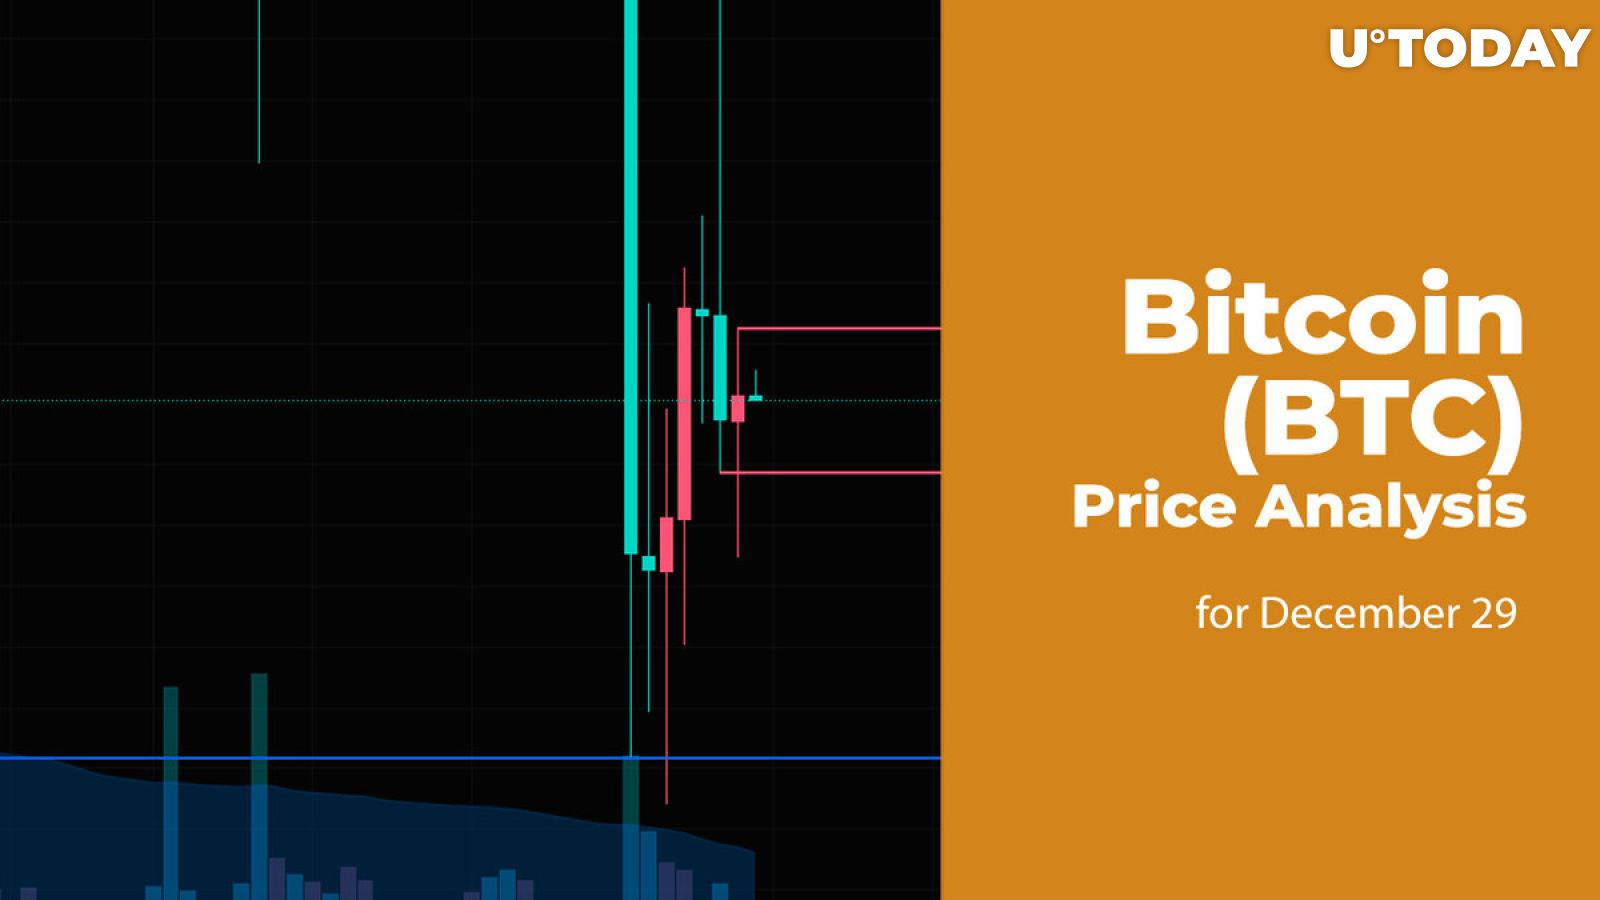 Bitcoin (BTC) Price Analysis for December 29